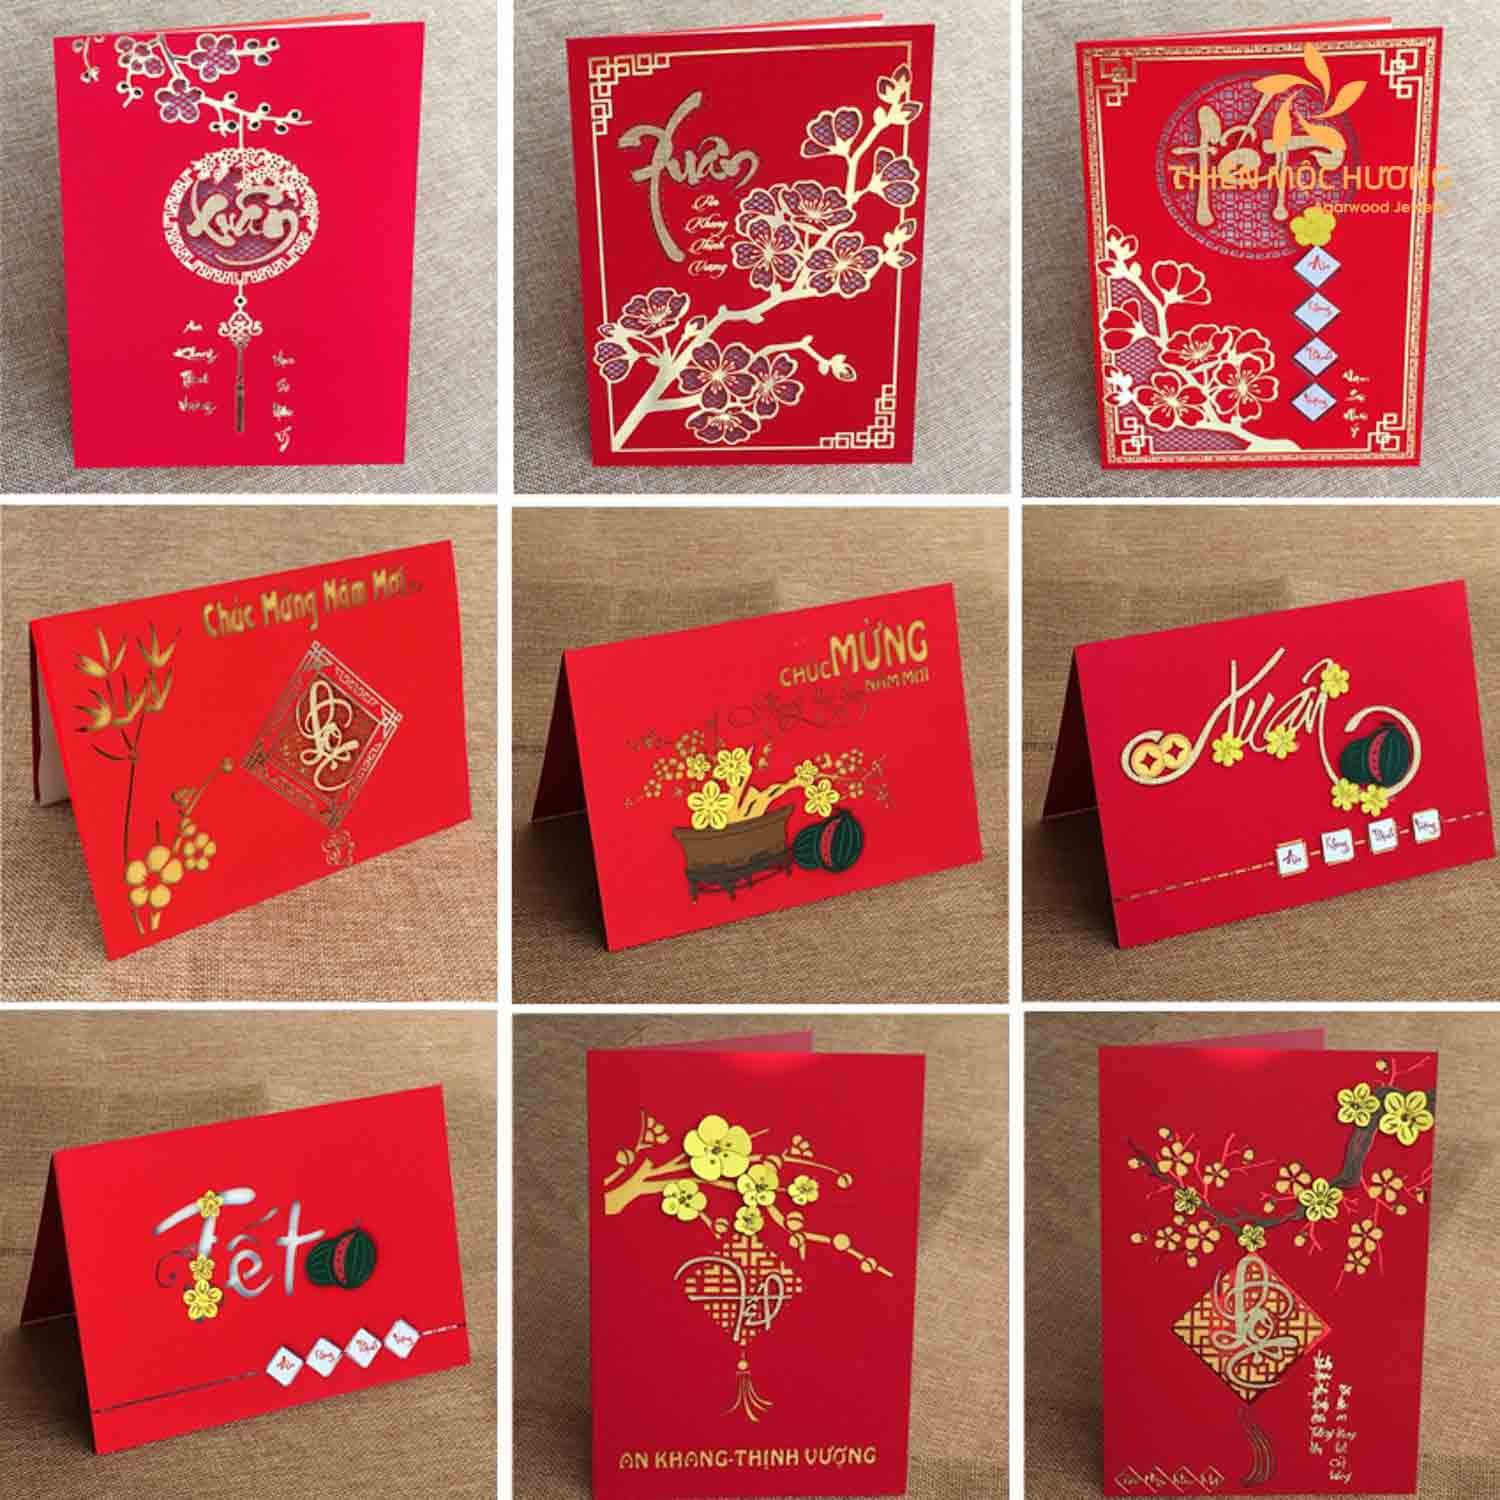 Creative Tet gift ideas - Tet greeting cards 